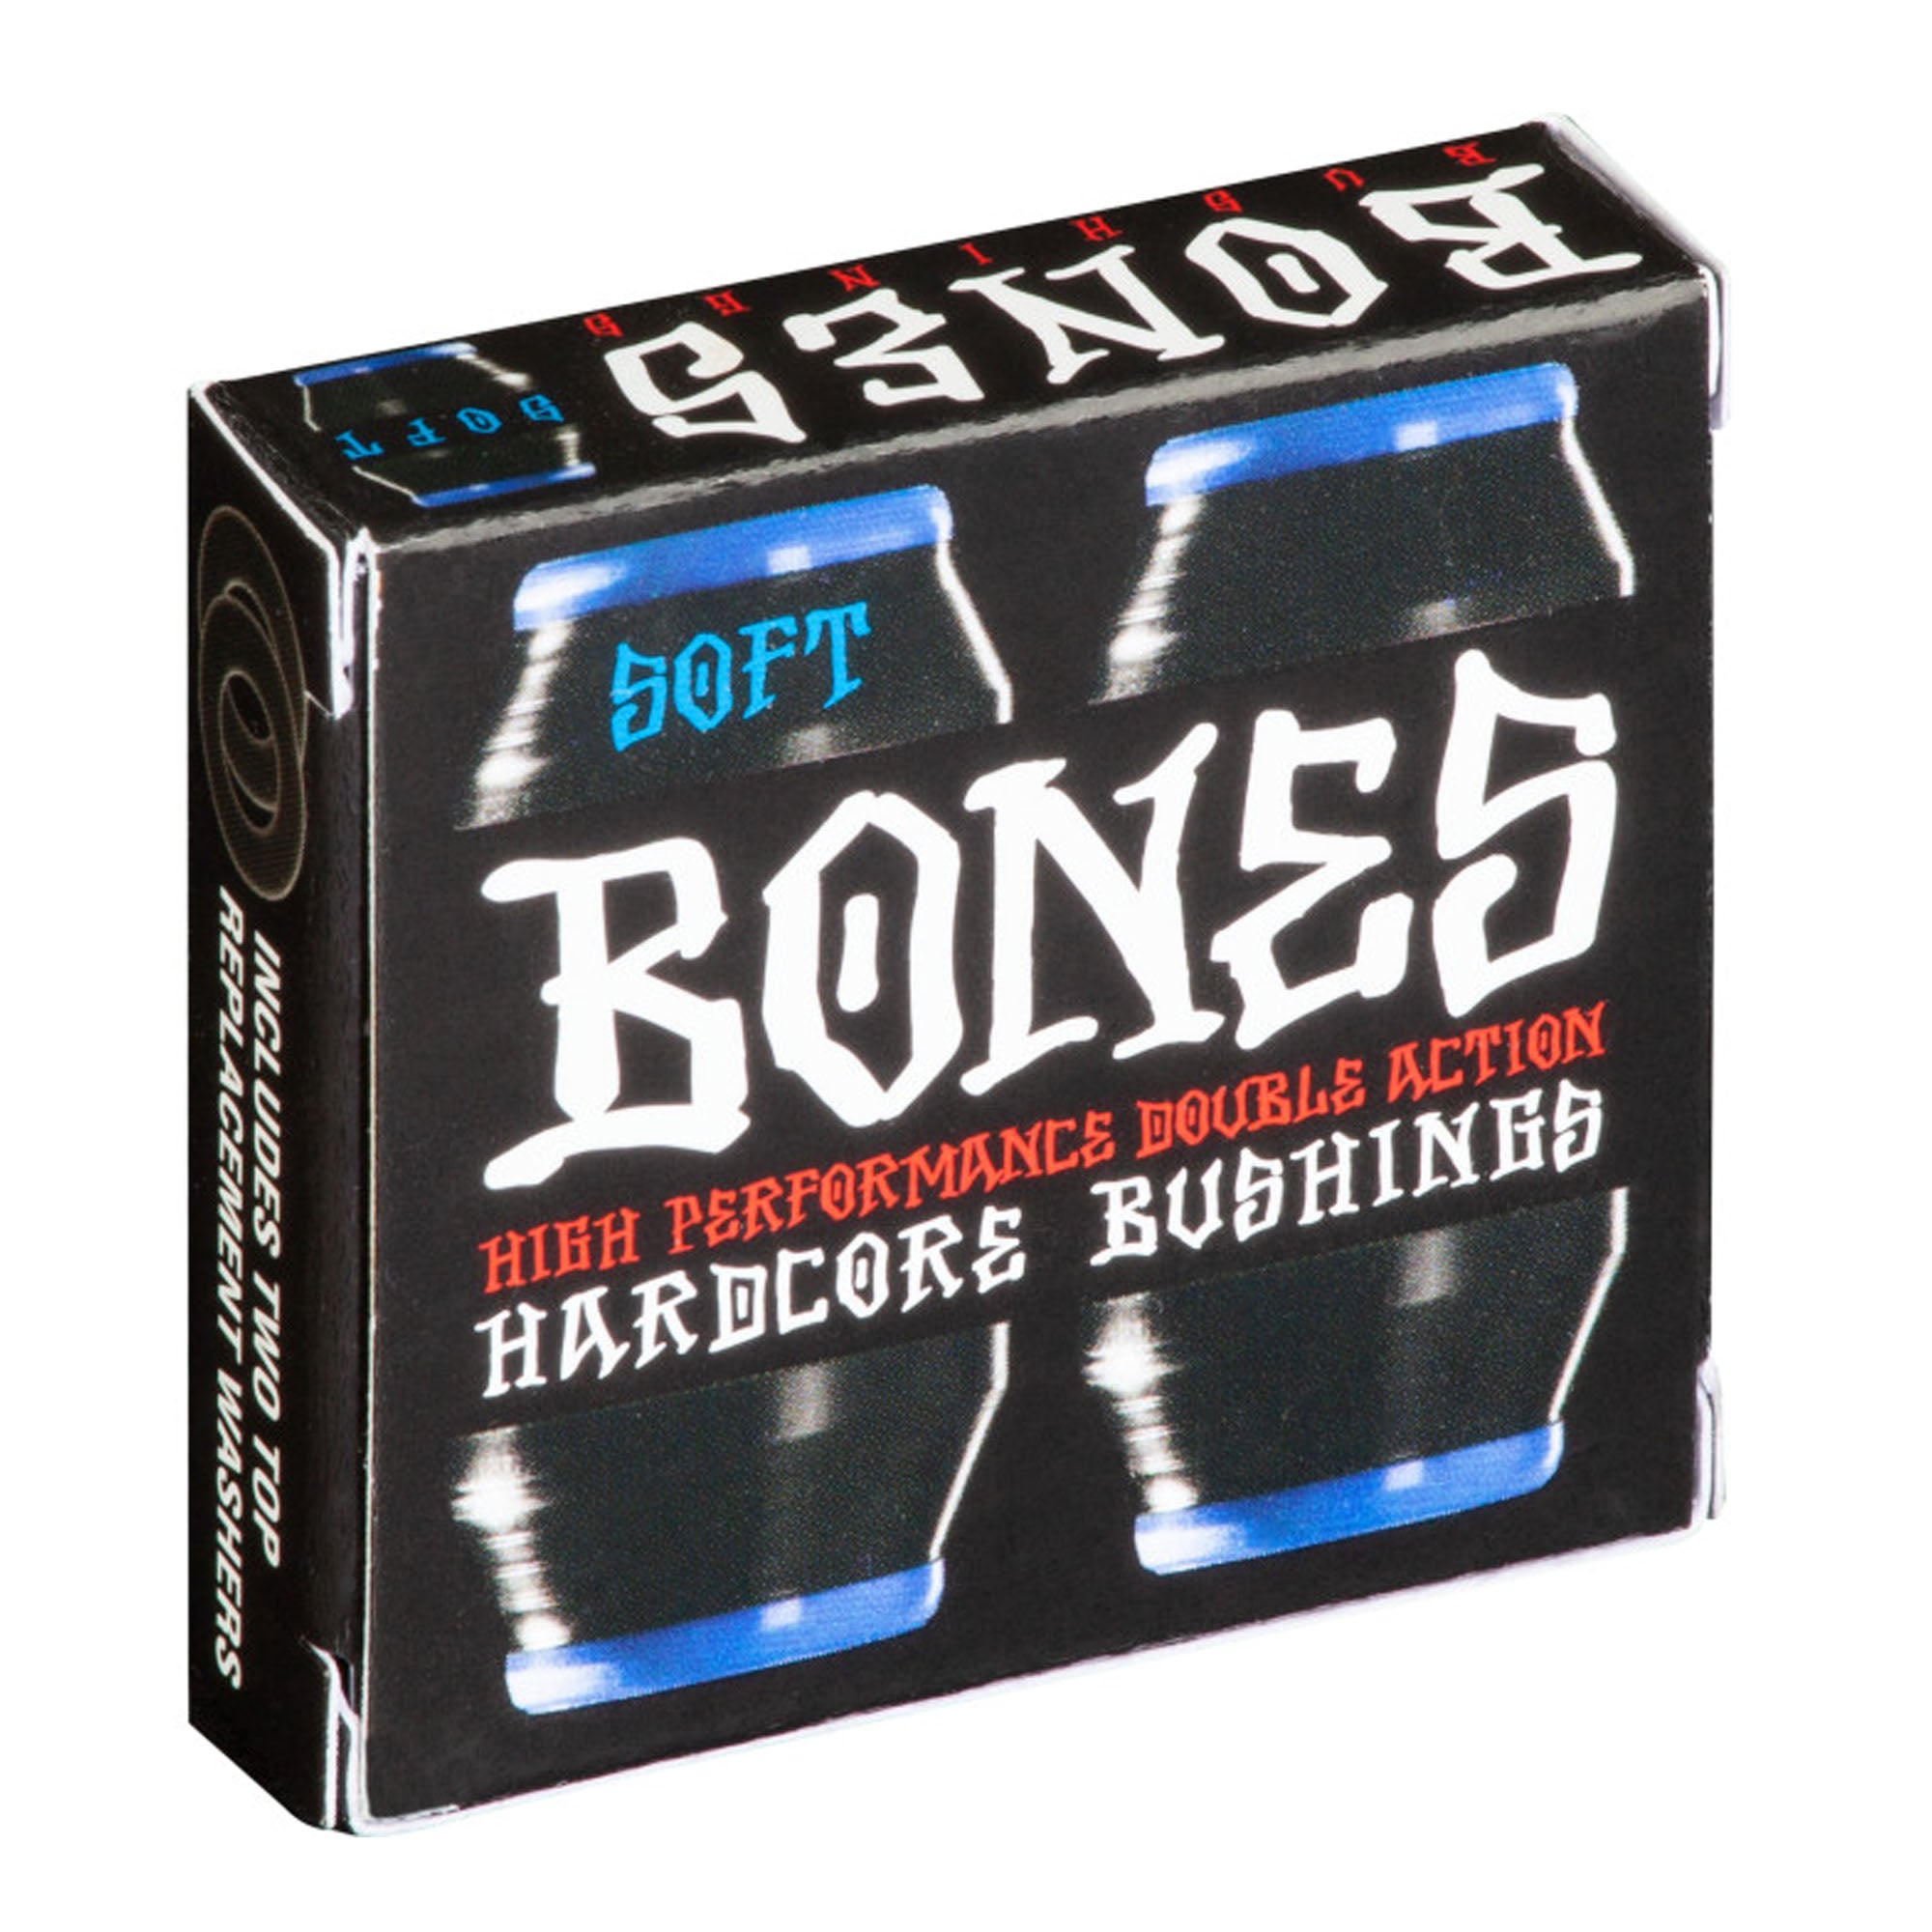 Bones Hardcore 4 Pack Soft Bushings